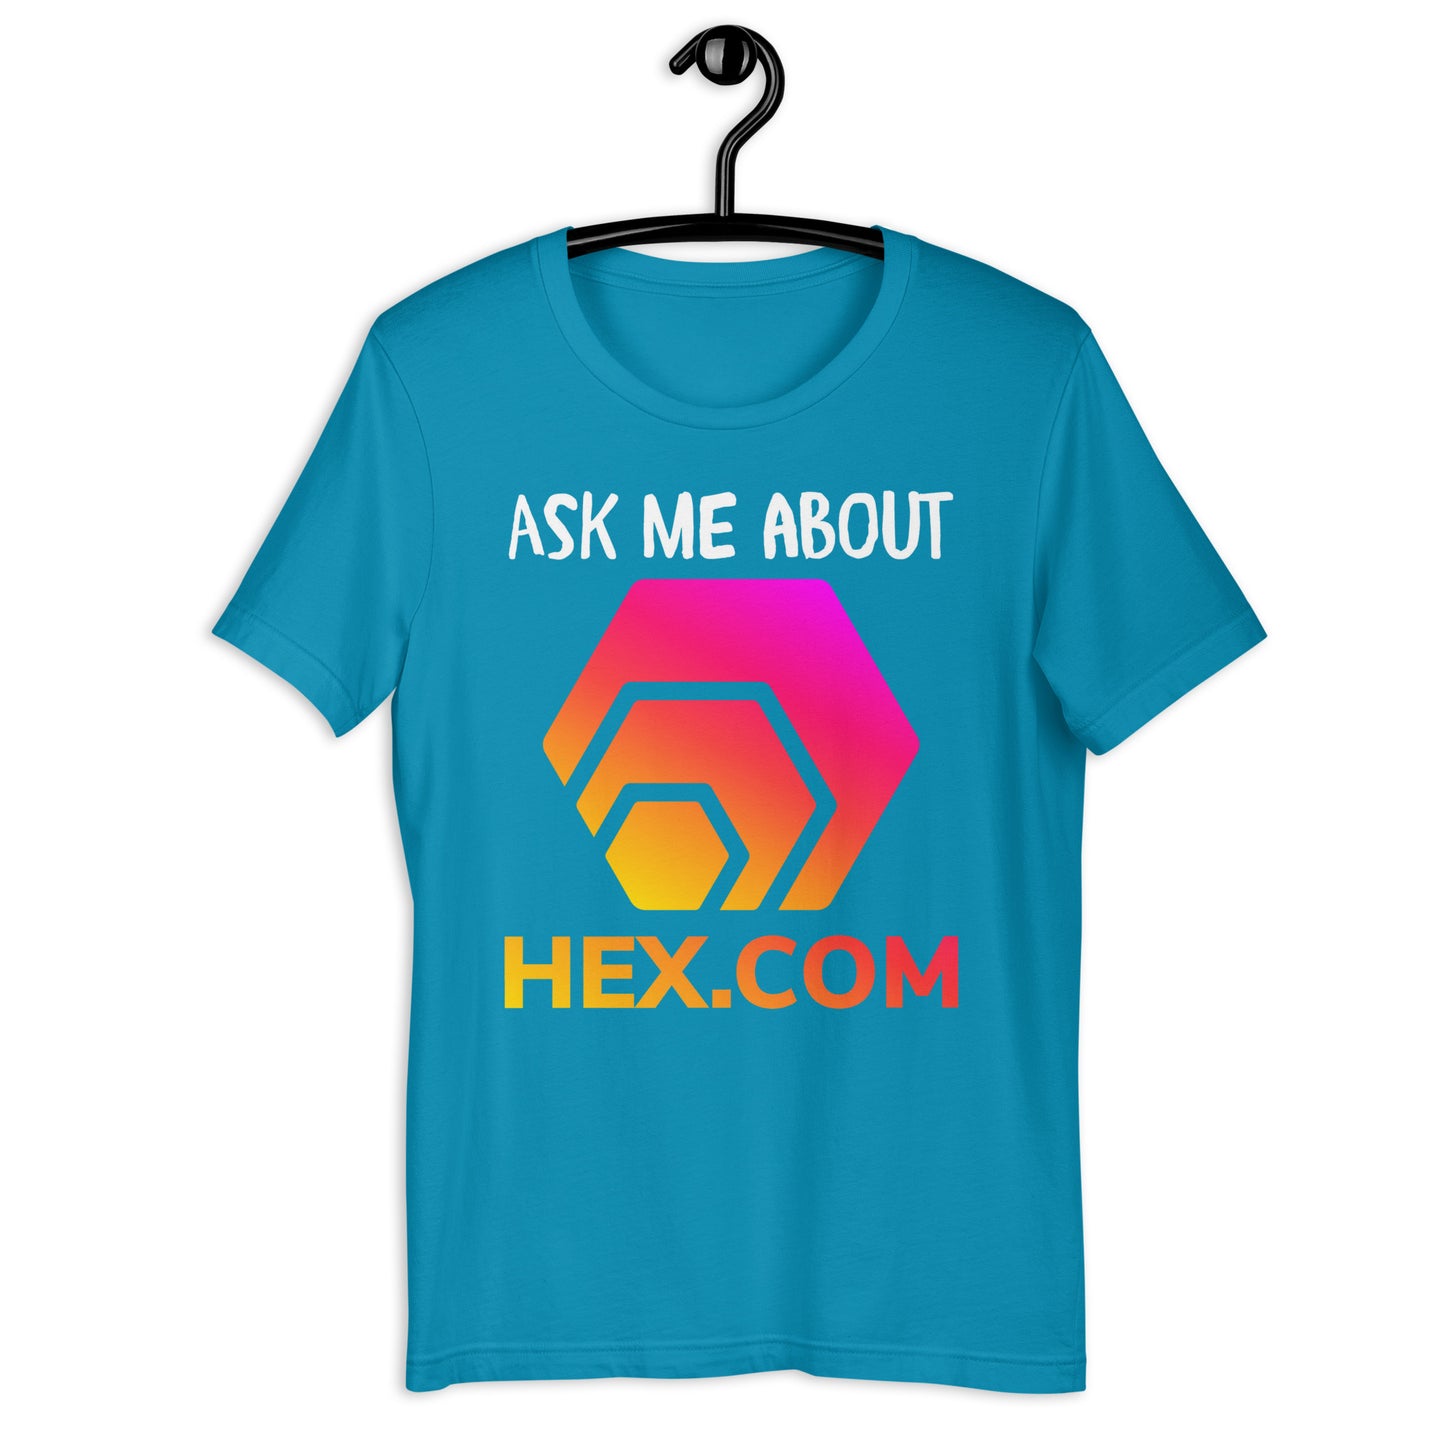 HEX - Ask Me About HEX.COM - Unisex T-Shirt